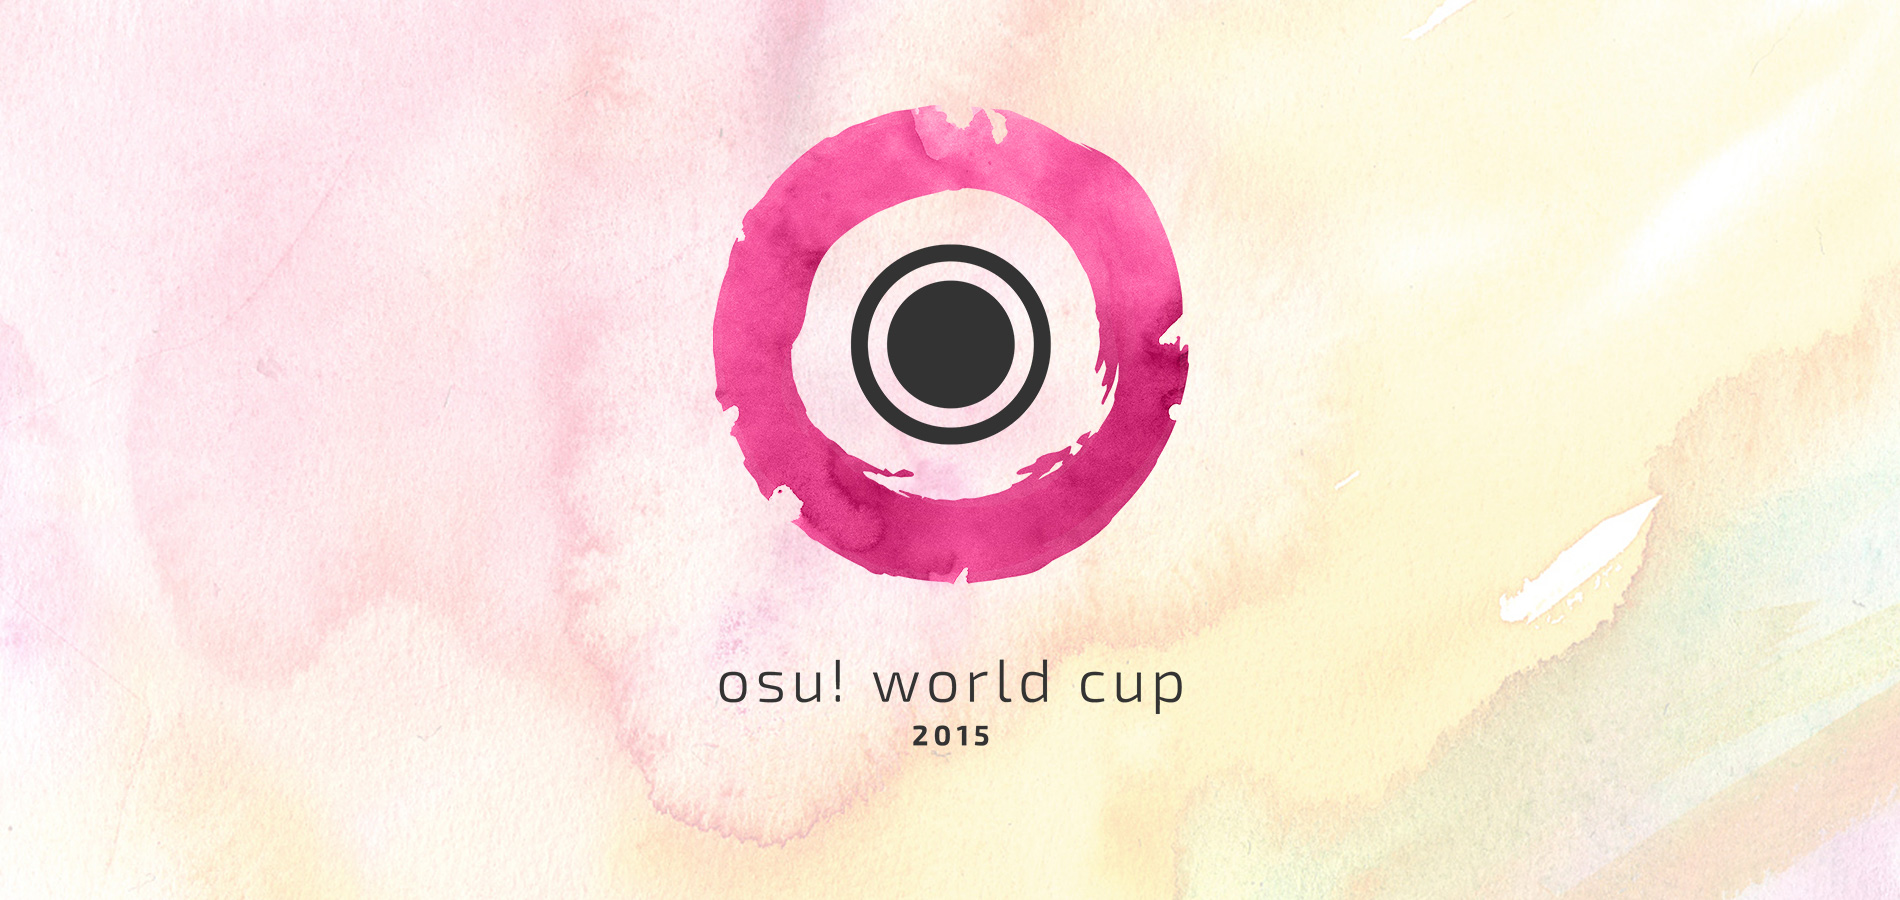 Осу кап. Osu World Cup. Osu Cup 2022. World of osu. Osu cup